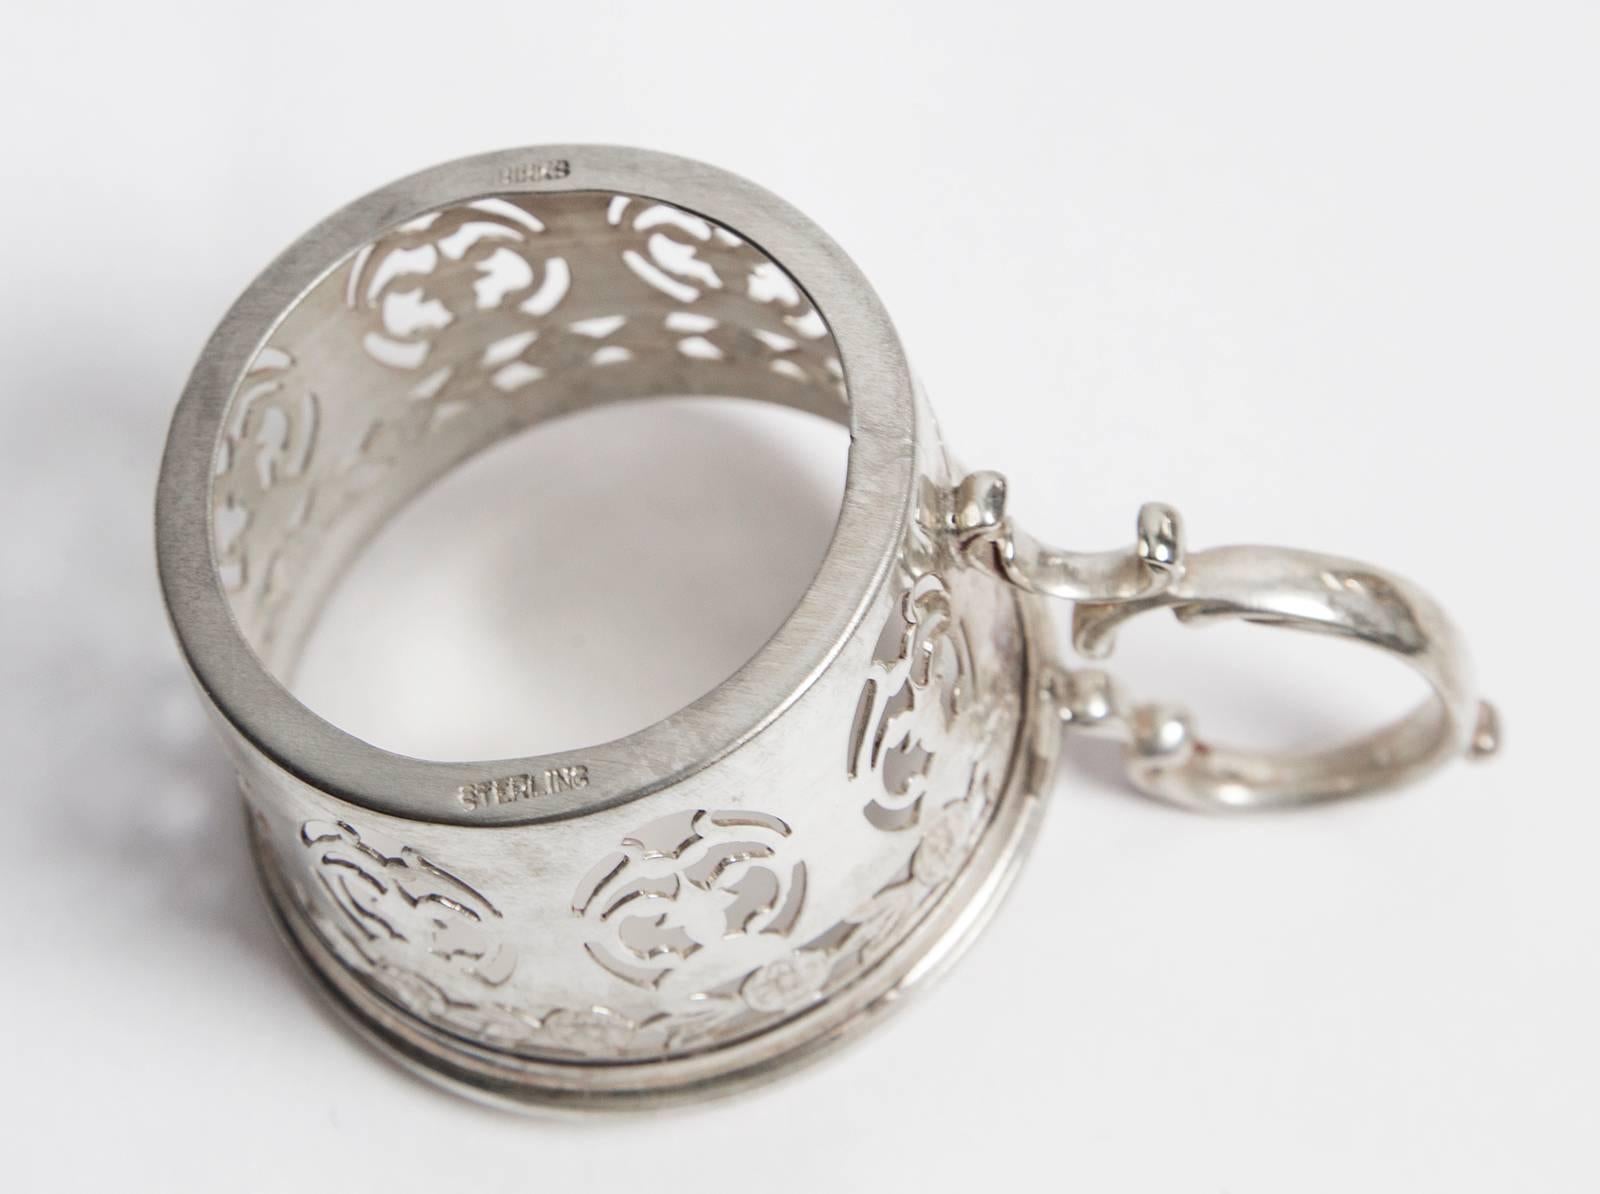 Porcelain Aynsley China Demitasse Set with Silver Holders in Original Presentation Case